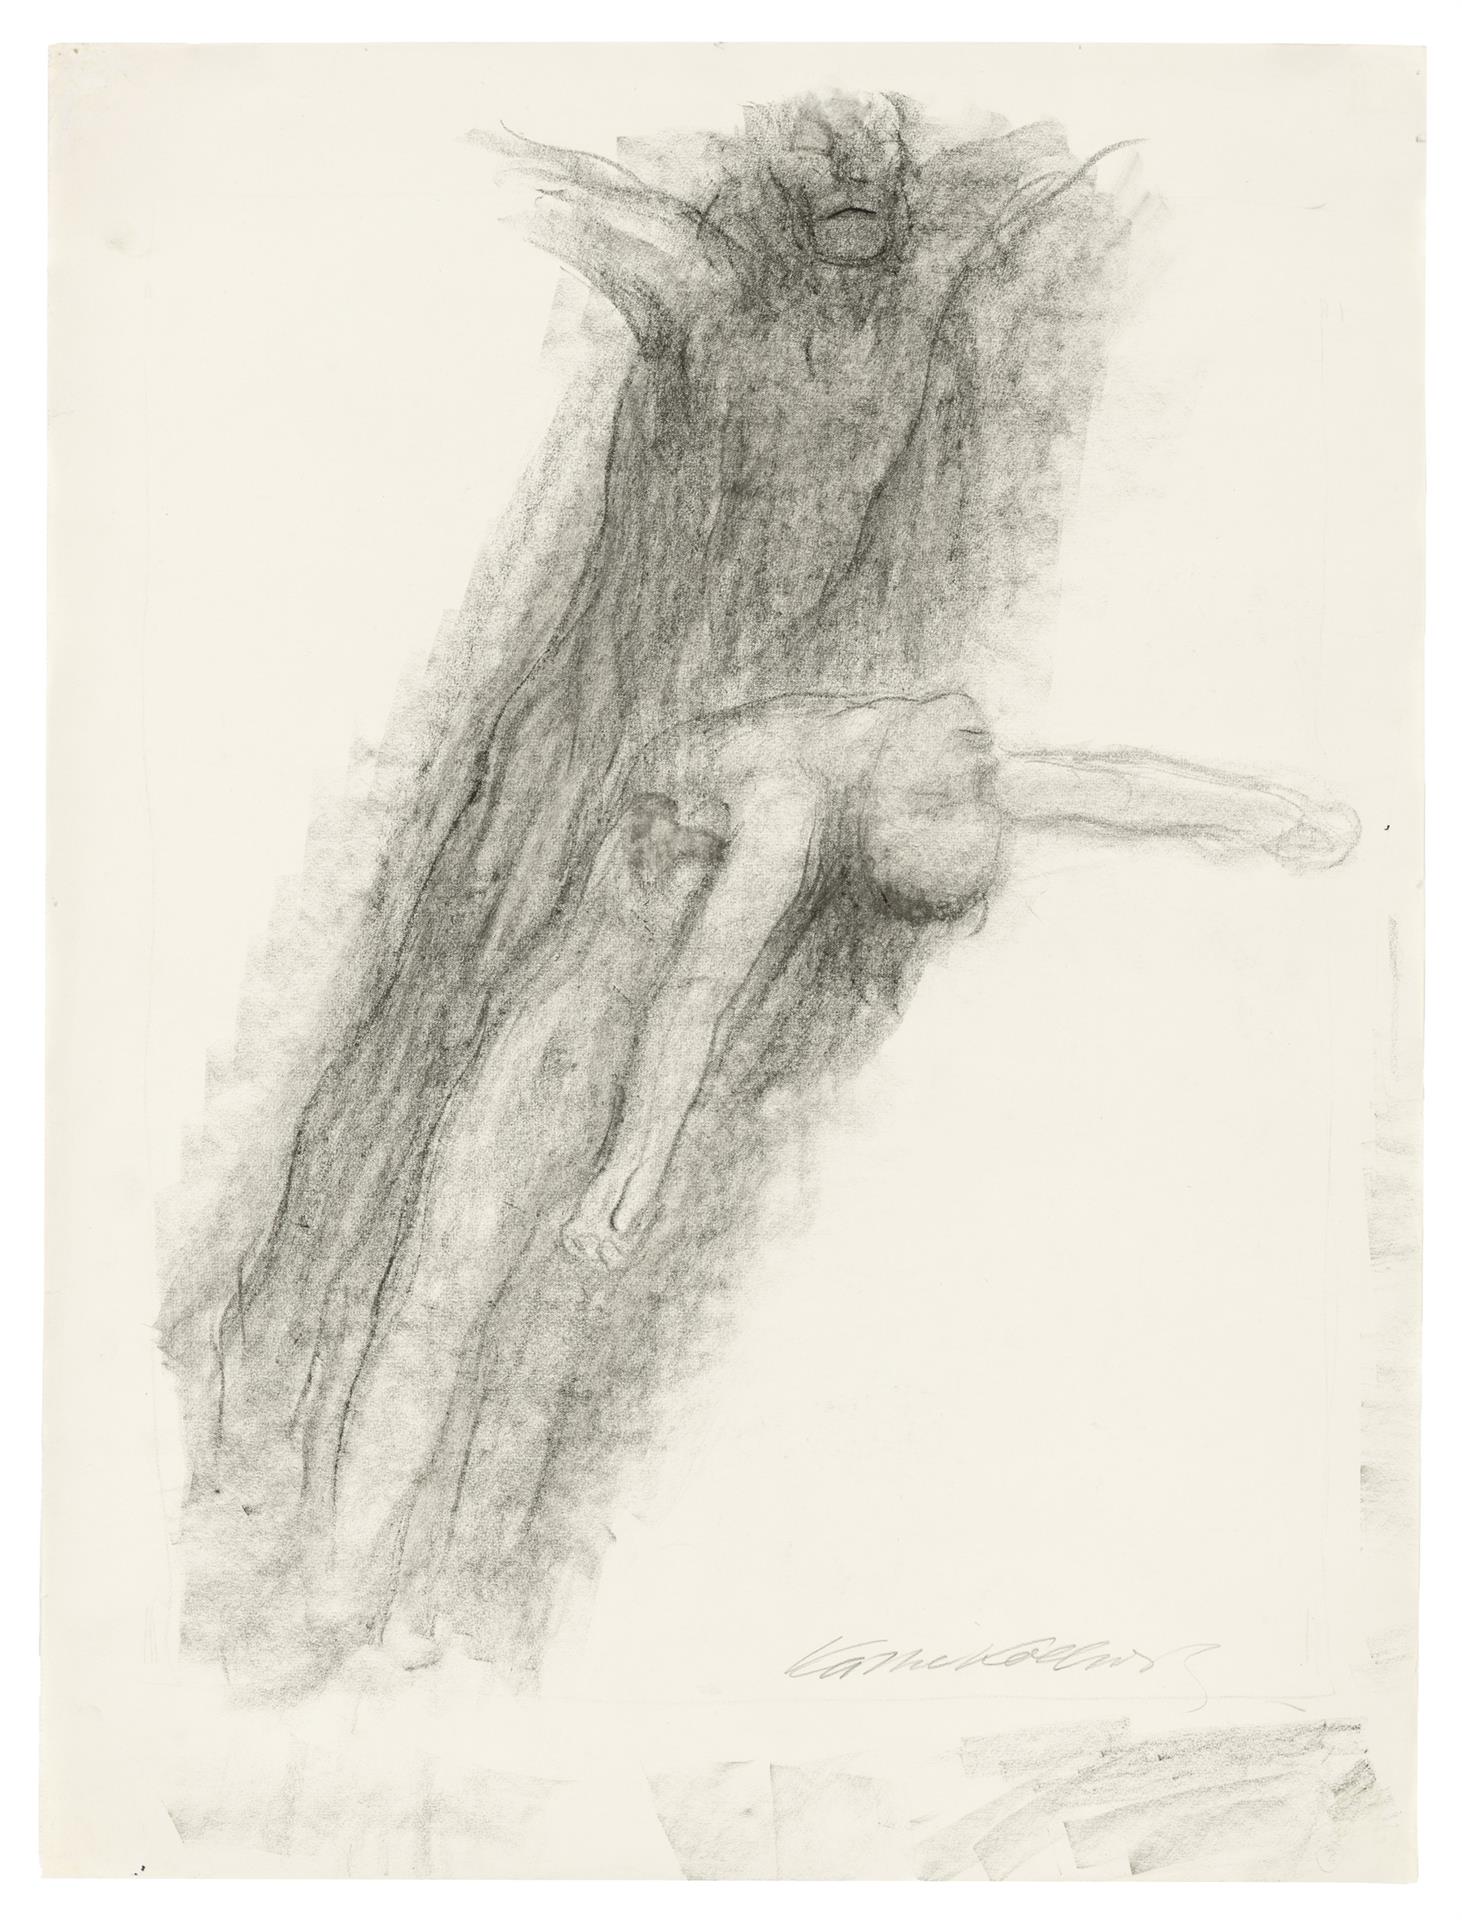 Käthe Kollwitz, Death and young Man, gliding upwards, c. 1922/1923, black crayon, blotted, on drawing paper, NT 963, Cologne Kollwitz Collection © Käthe Kollwitz Museum Köln